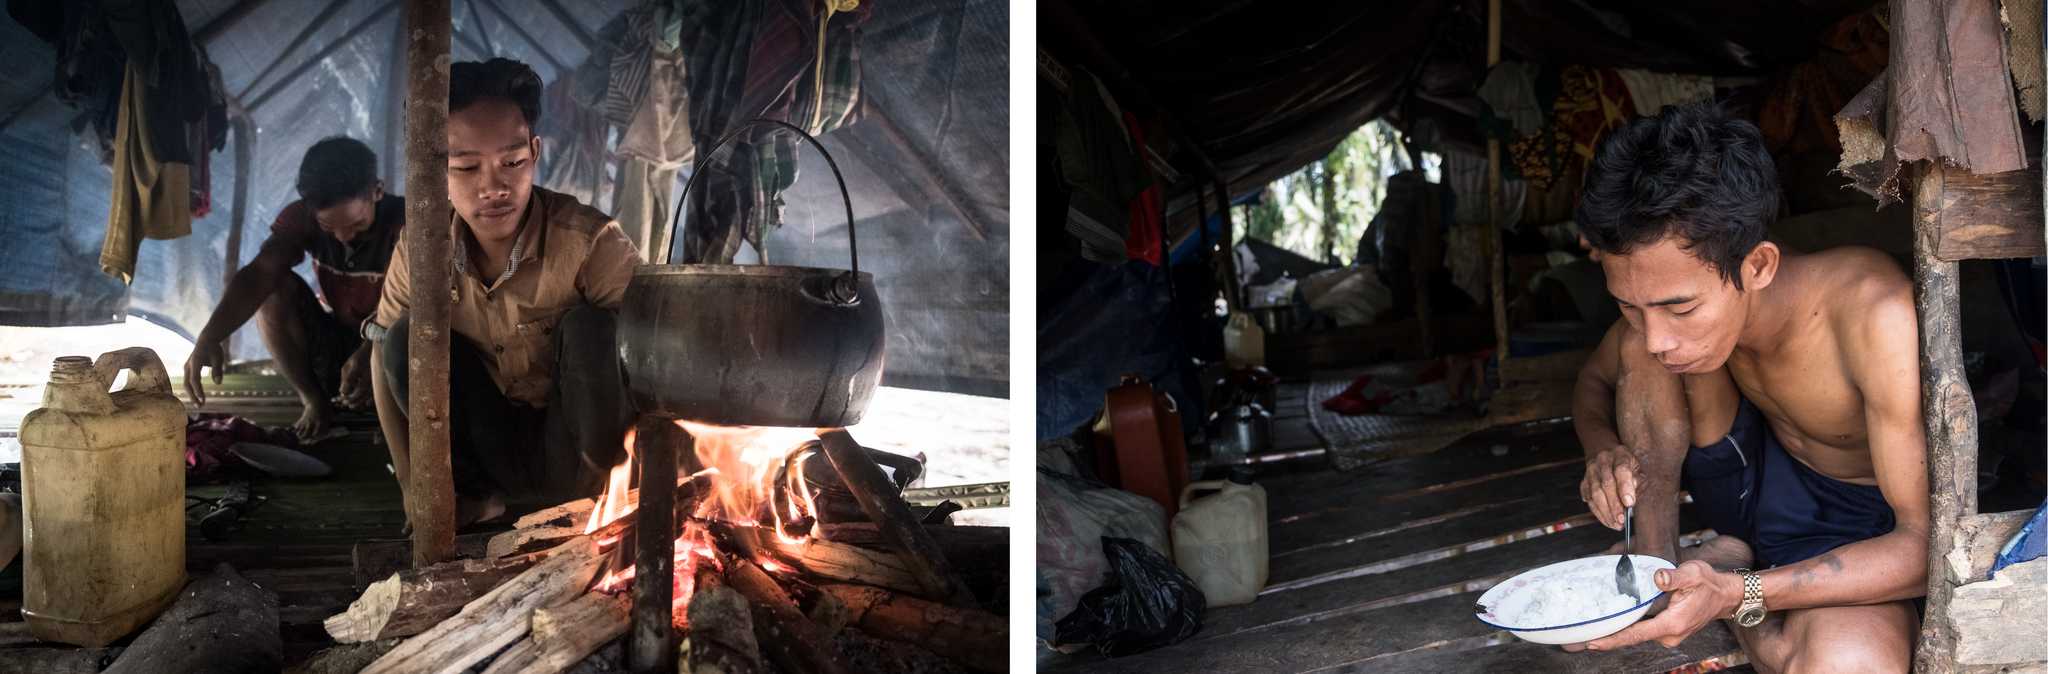 Sandra (kiri) memasak nasi untuk keluarganya di gubuk mereka. Anak-anak Suku Anak Dalam umumnya tidak bersekolah. Mat Yadi (kanan) menyantap makan siangnya berupa nasi dan garam. Oleh Nopri Ismi.